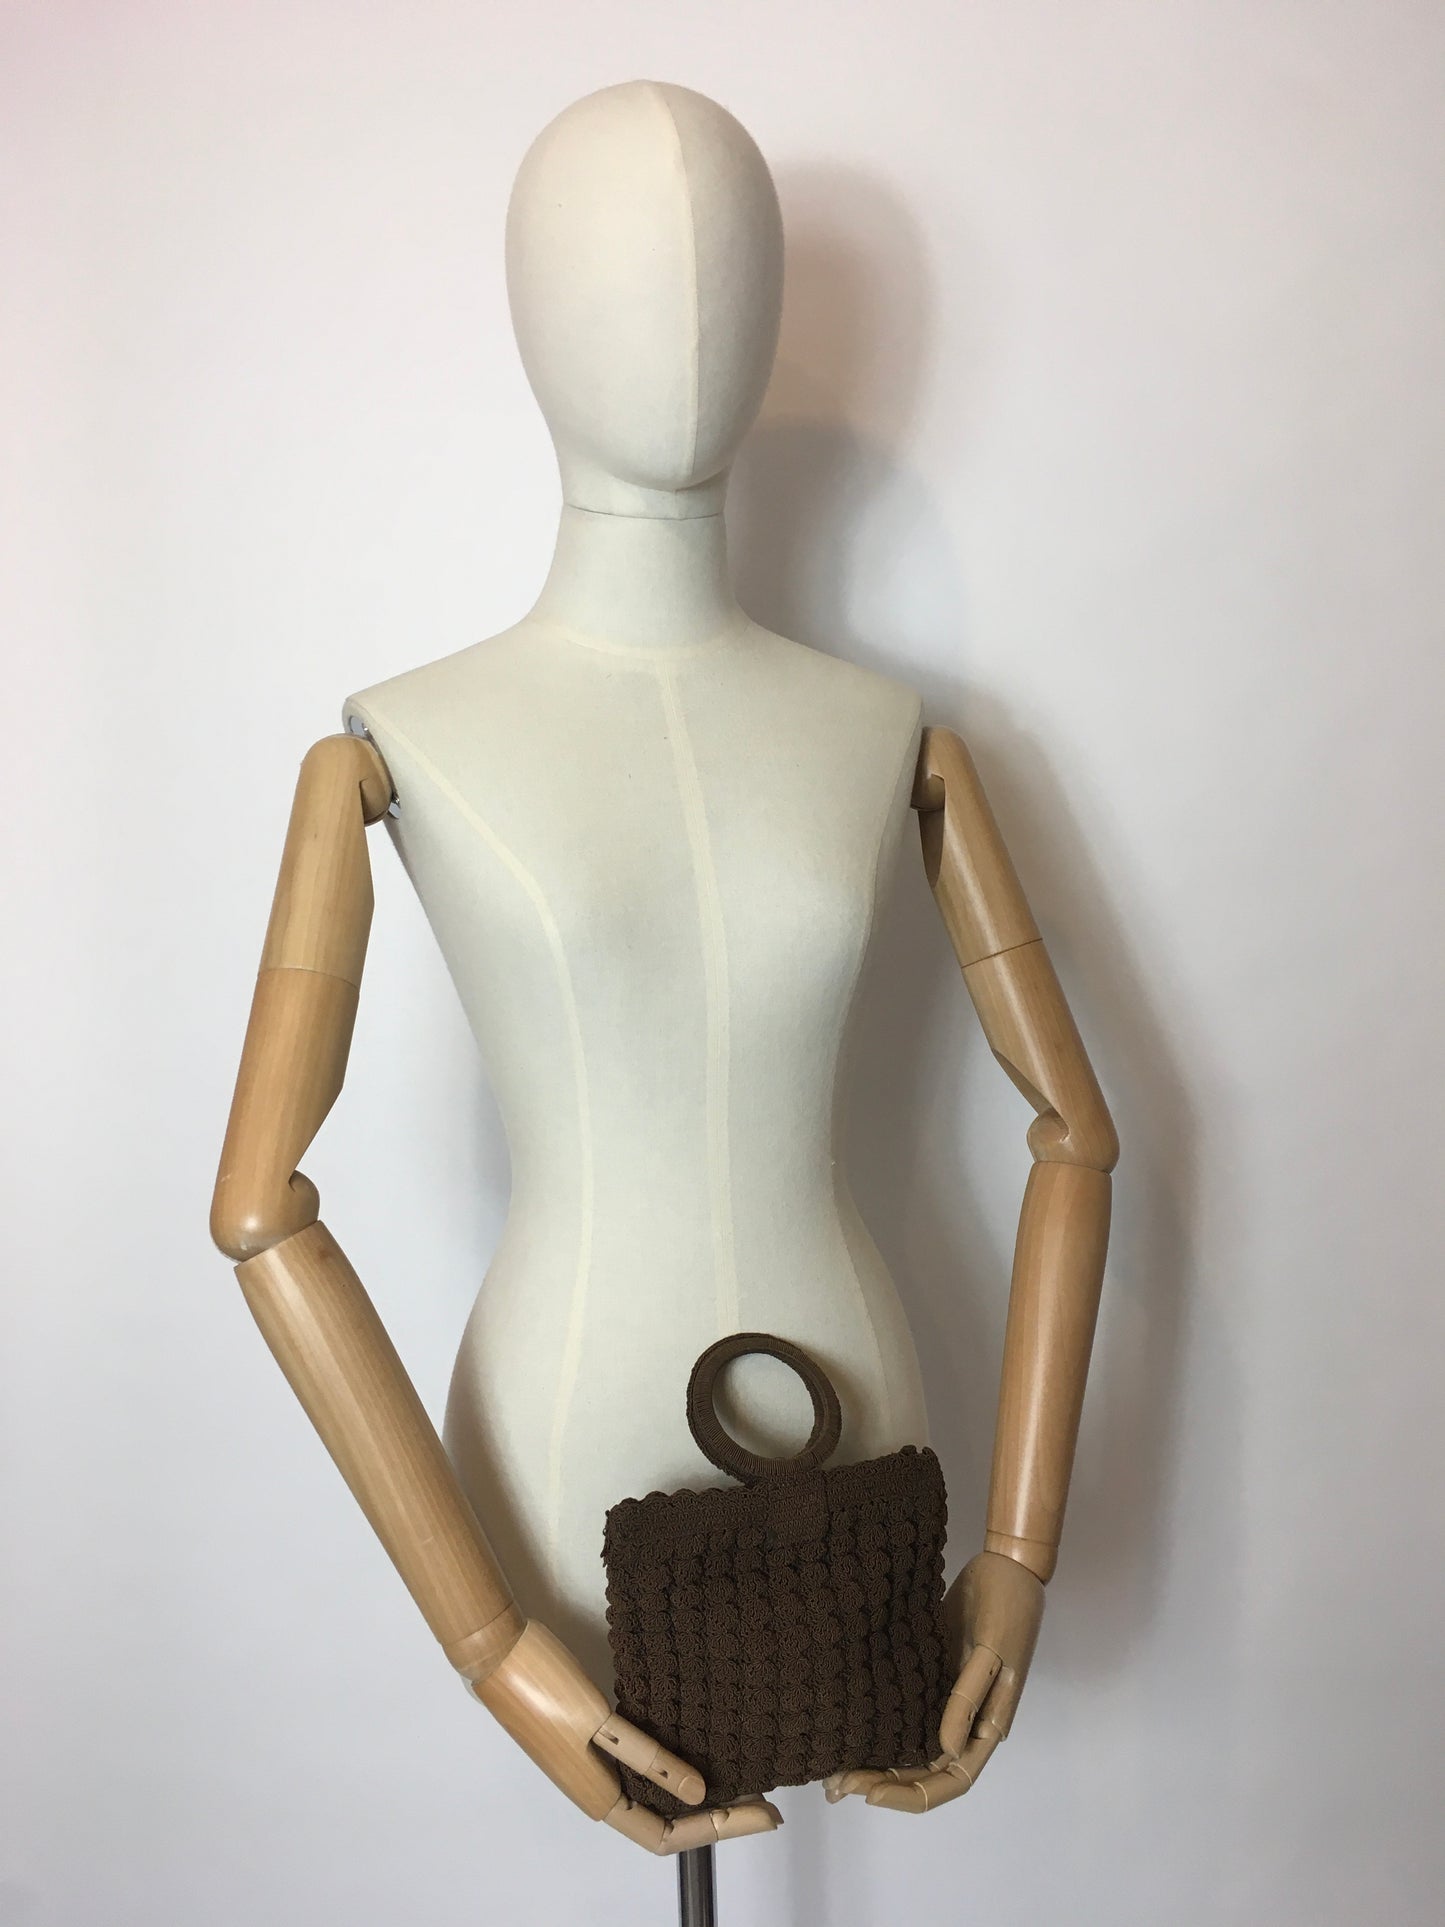 Original 1930’s Brown Popcorn Crochet Handbag - Festival of Vintage Fashion Show Exclusive